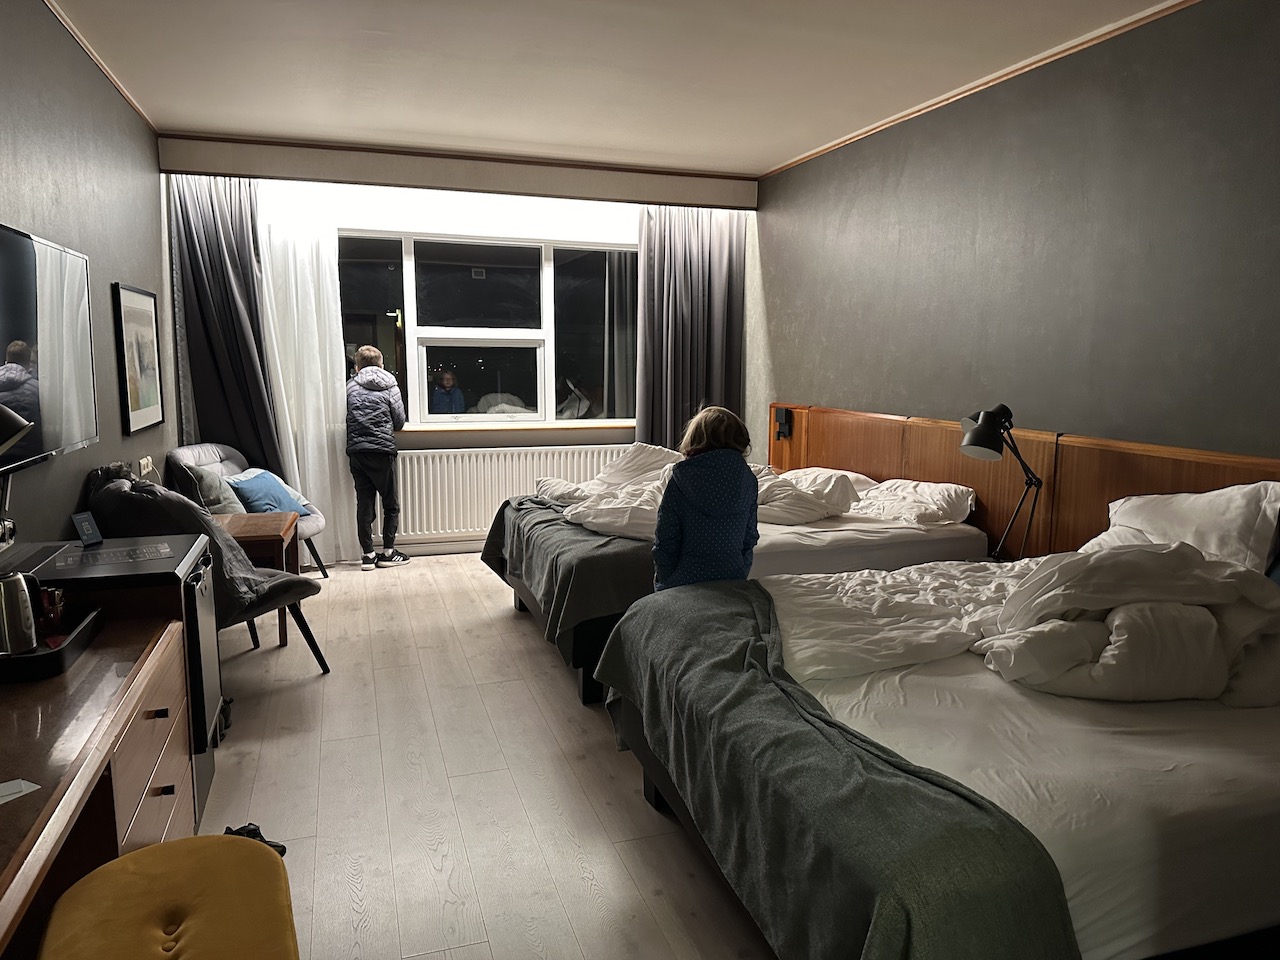 Iceland family holiday - Hotel Island Spa and Wellness 